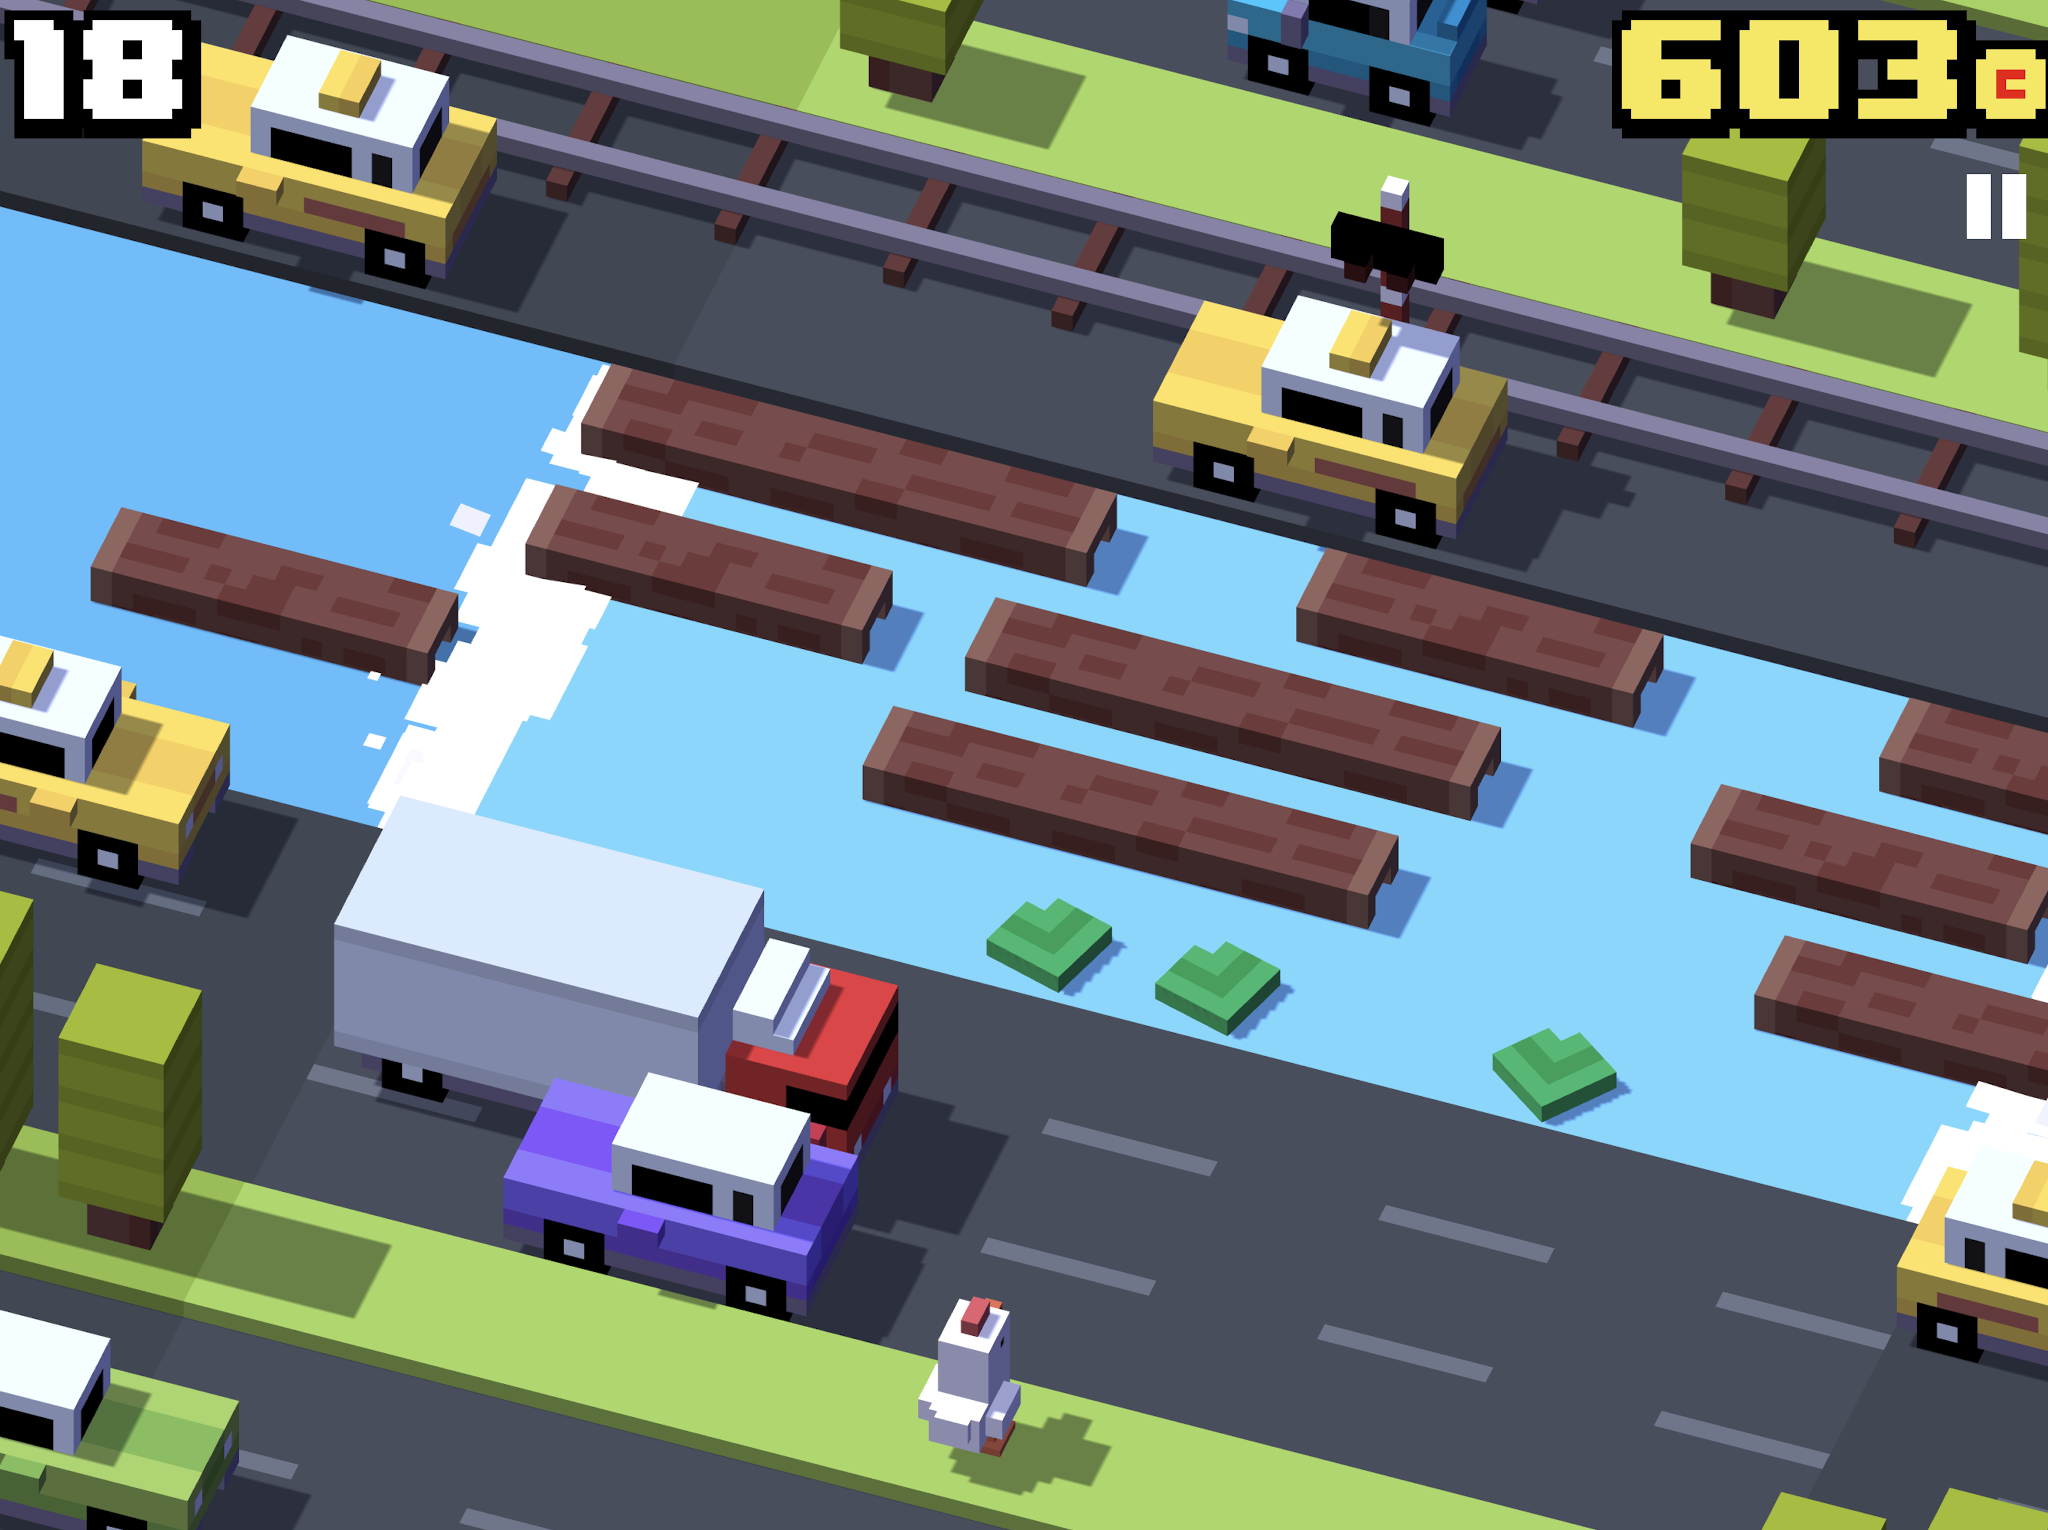 Chicken Simulator: Crossy Road 3d, Rush Hour – 24 Roads Crossed